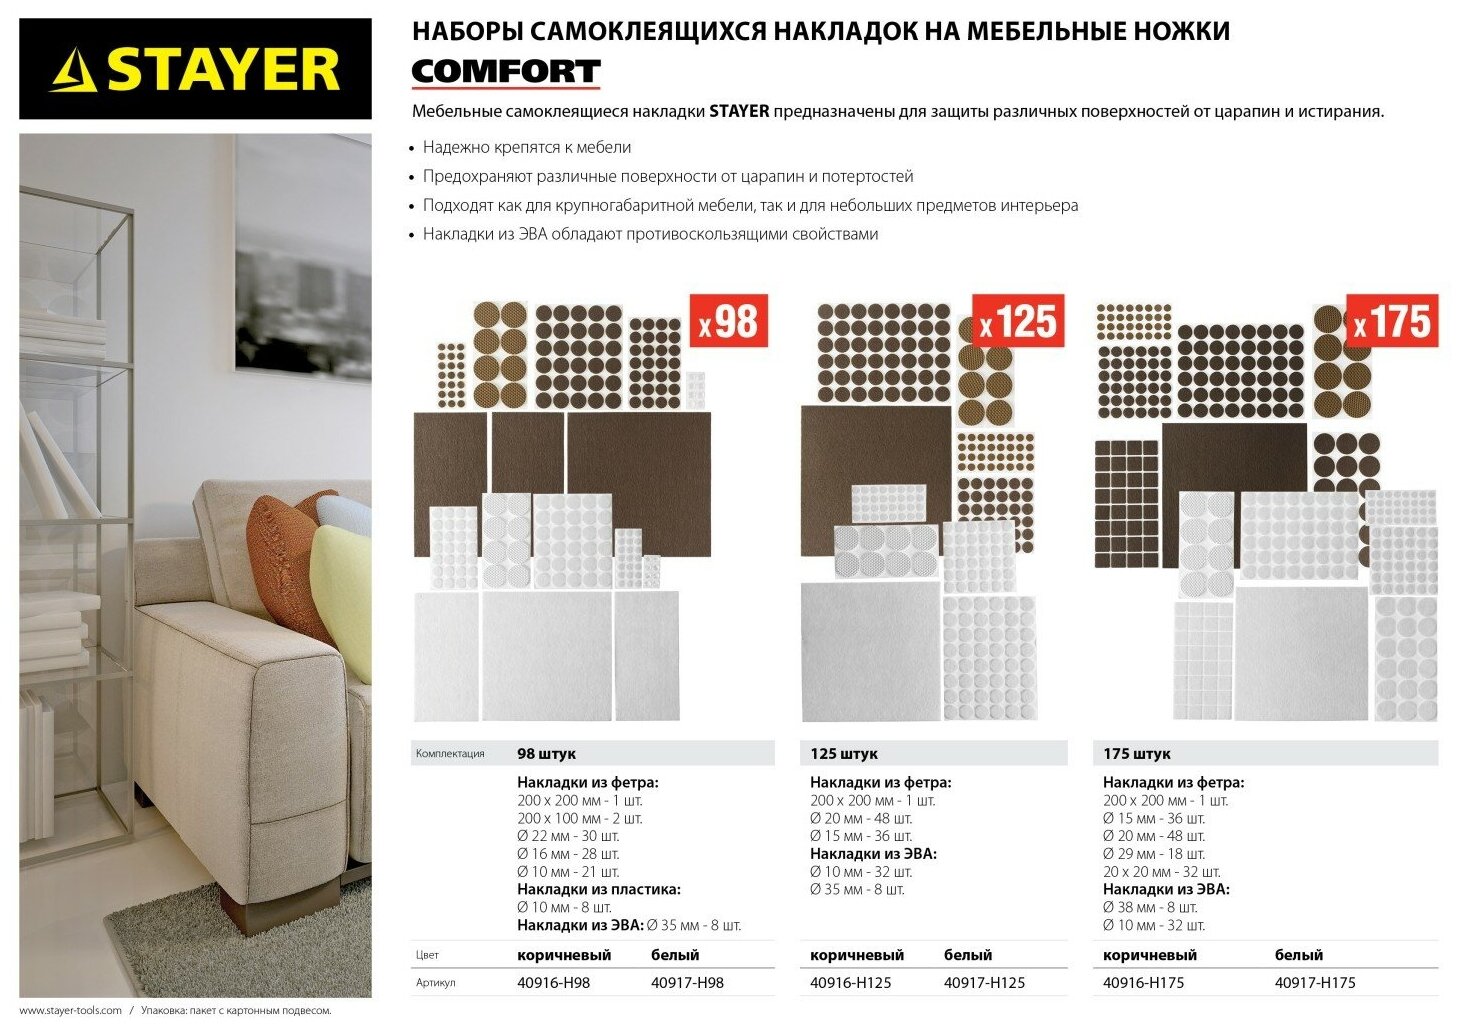 STAYER белые, самоклеящиеся, 125 шт, набор мебельных накладок (40917-H125)